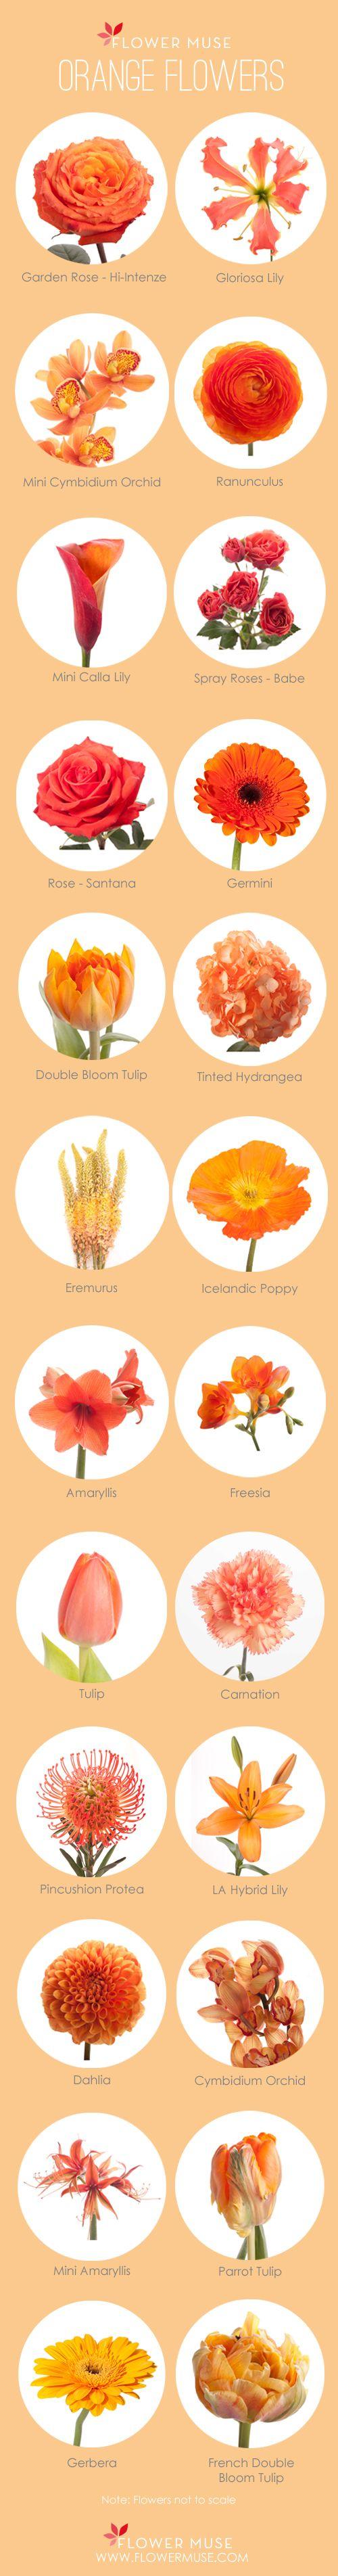 Mariage - Our Favorite: Orange Flowers - Flower Muse Blog